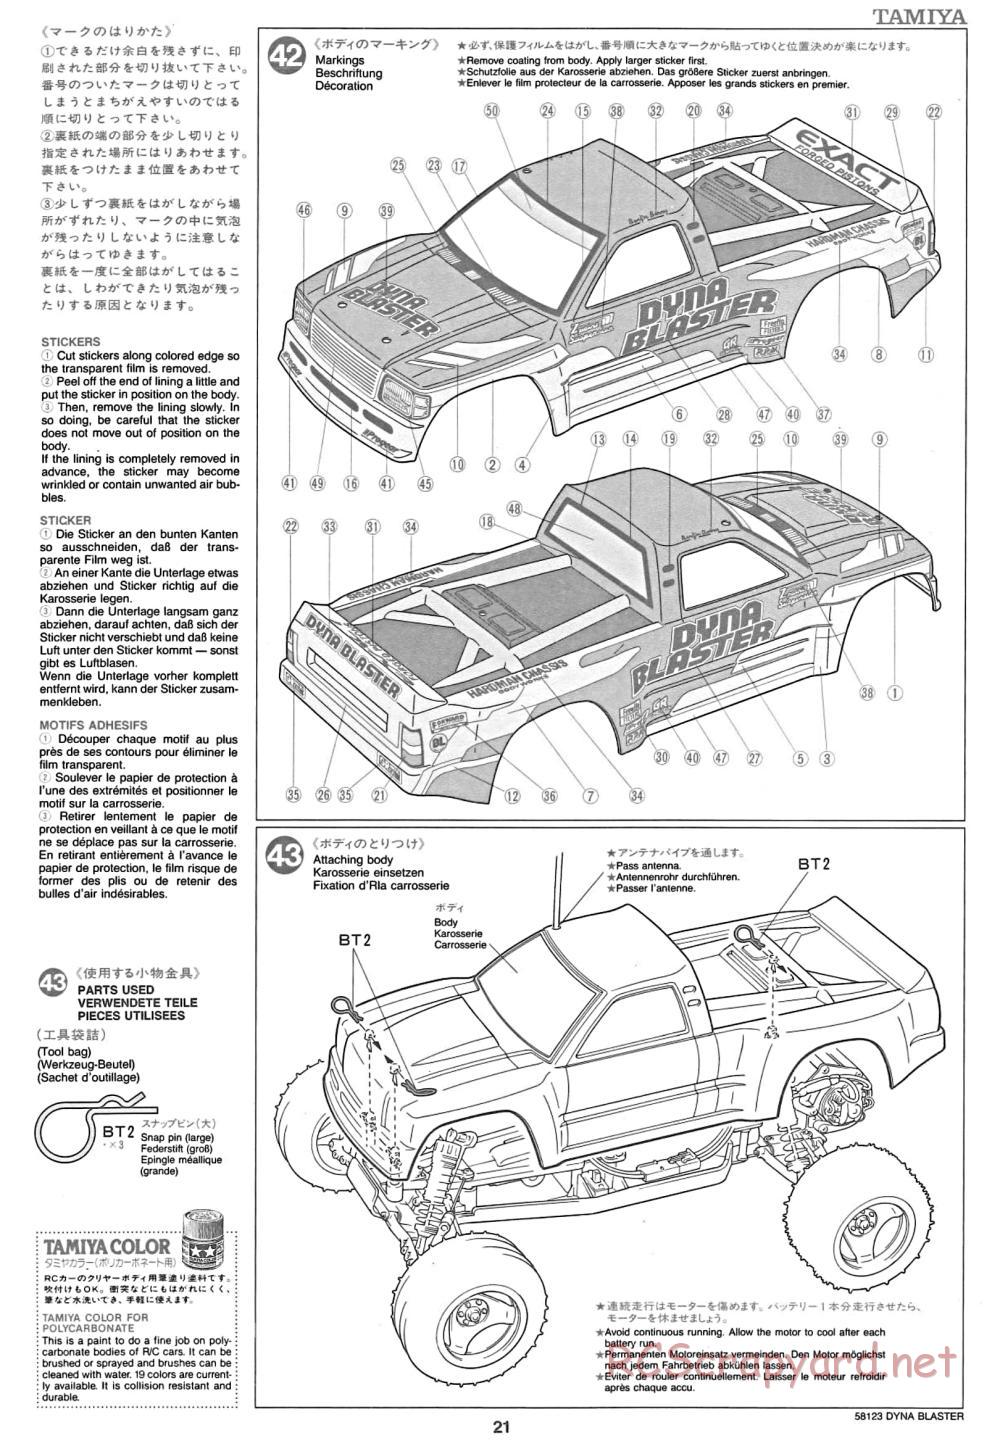 Tamiya - Dyna Blaster Chassis - Manual - Page 21